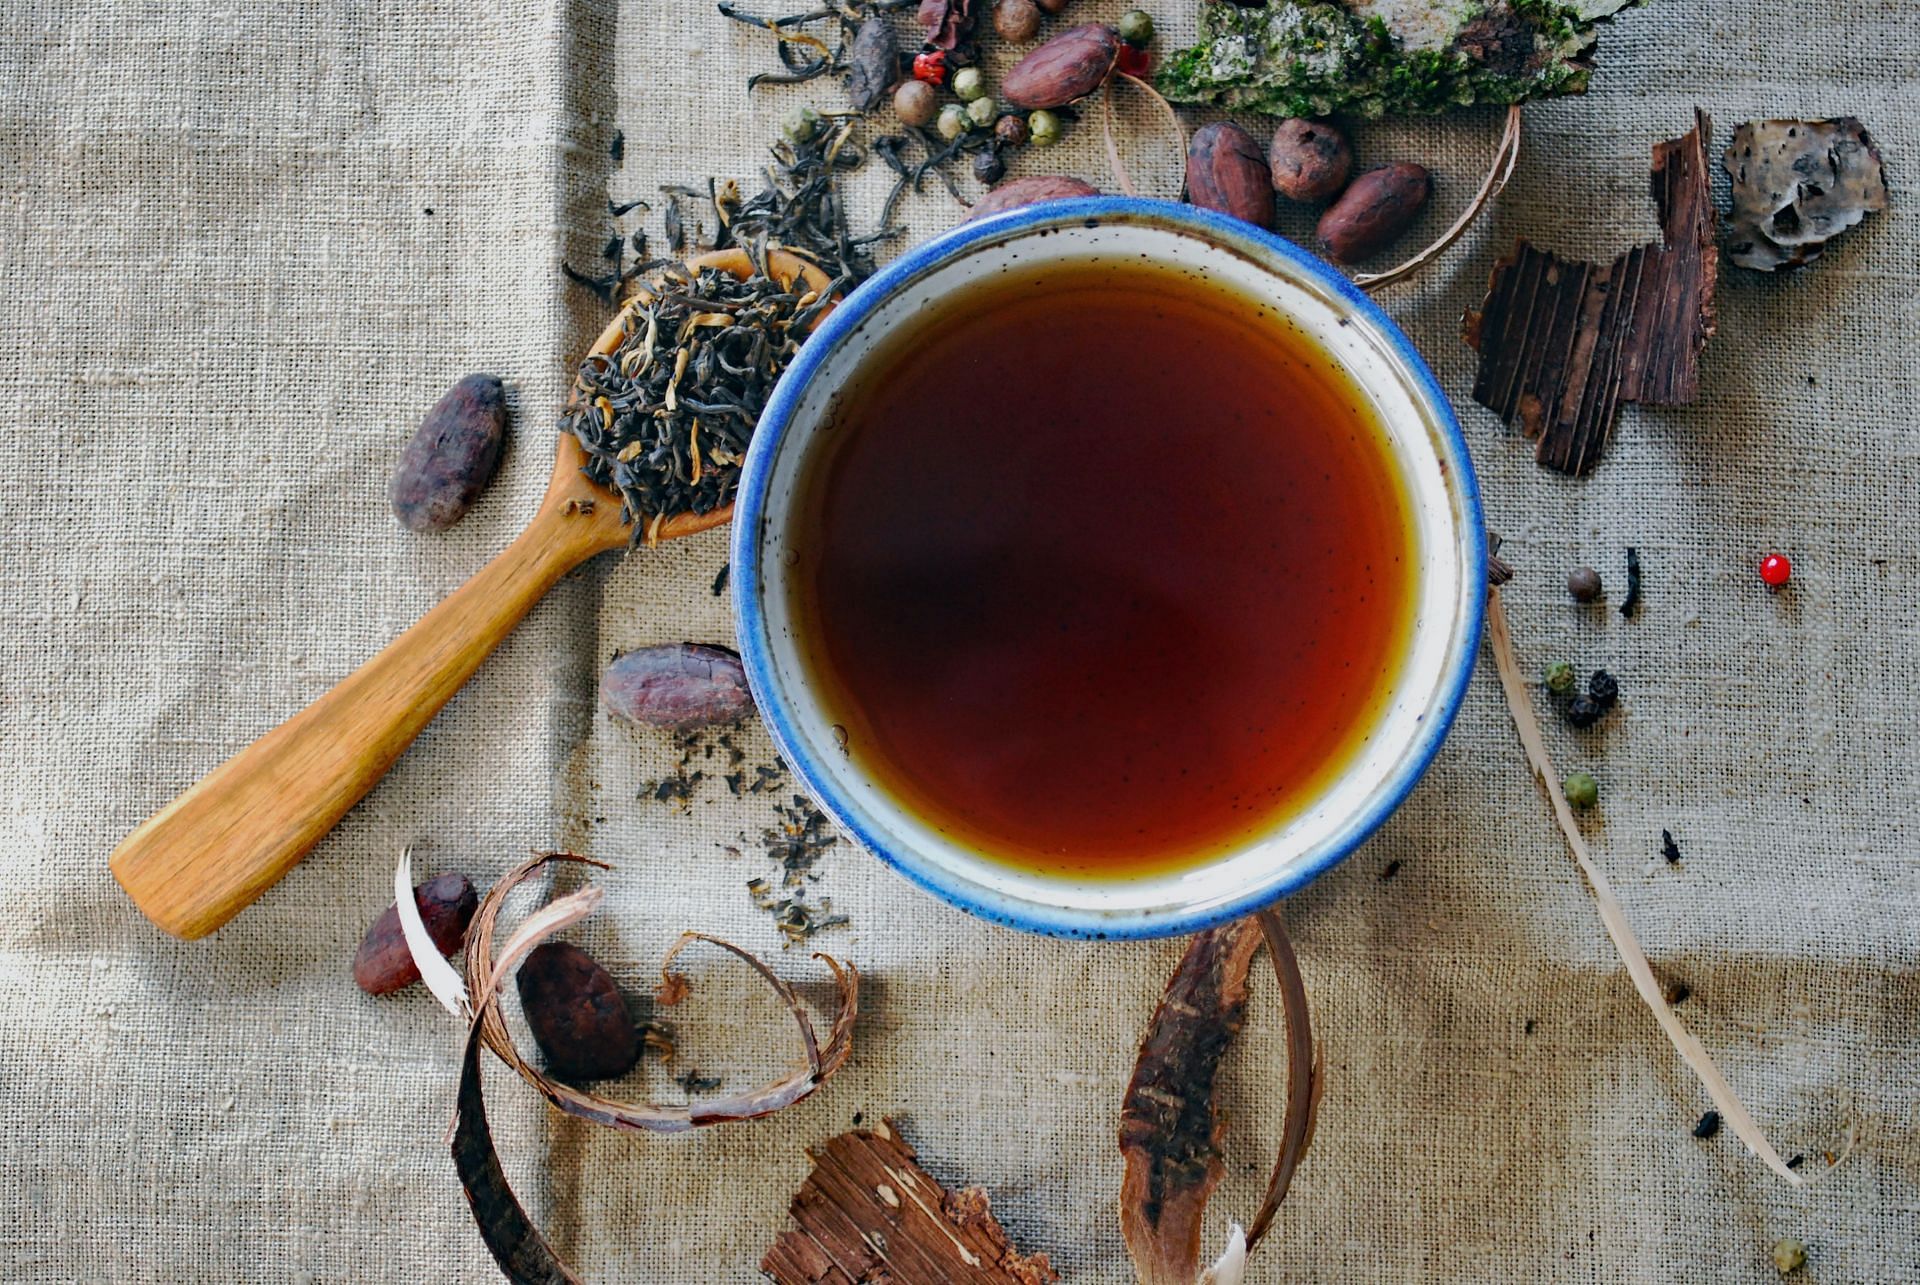 Herbal teas can make you feel more energized. (Image via Unsplash/Drew Jemmett)